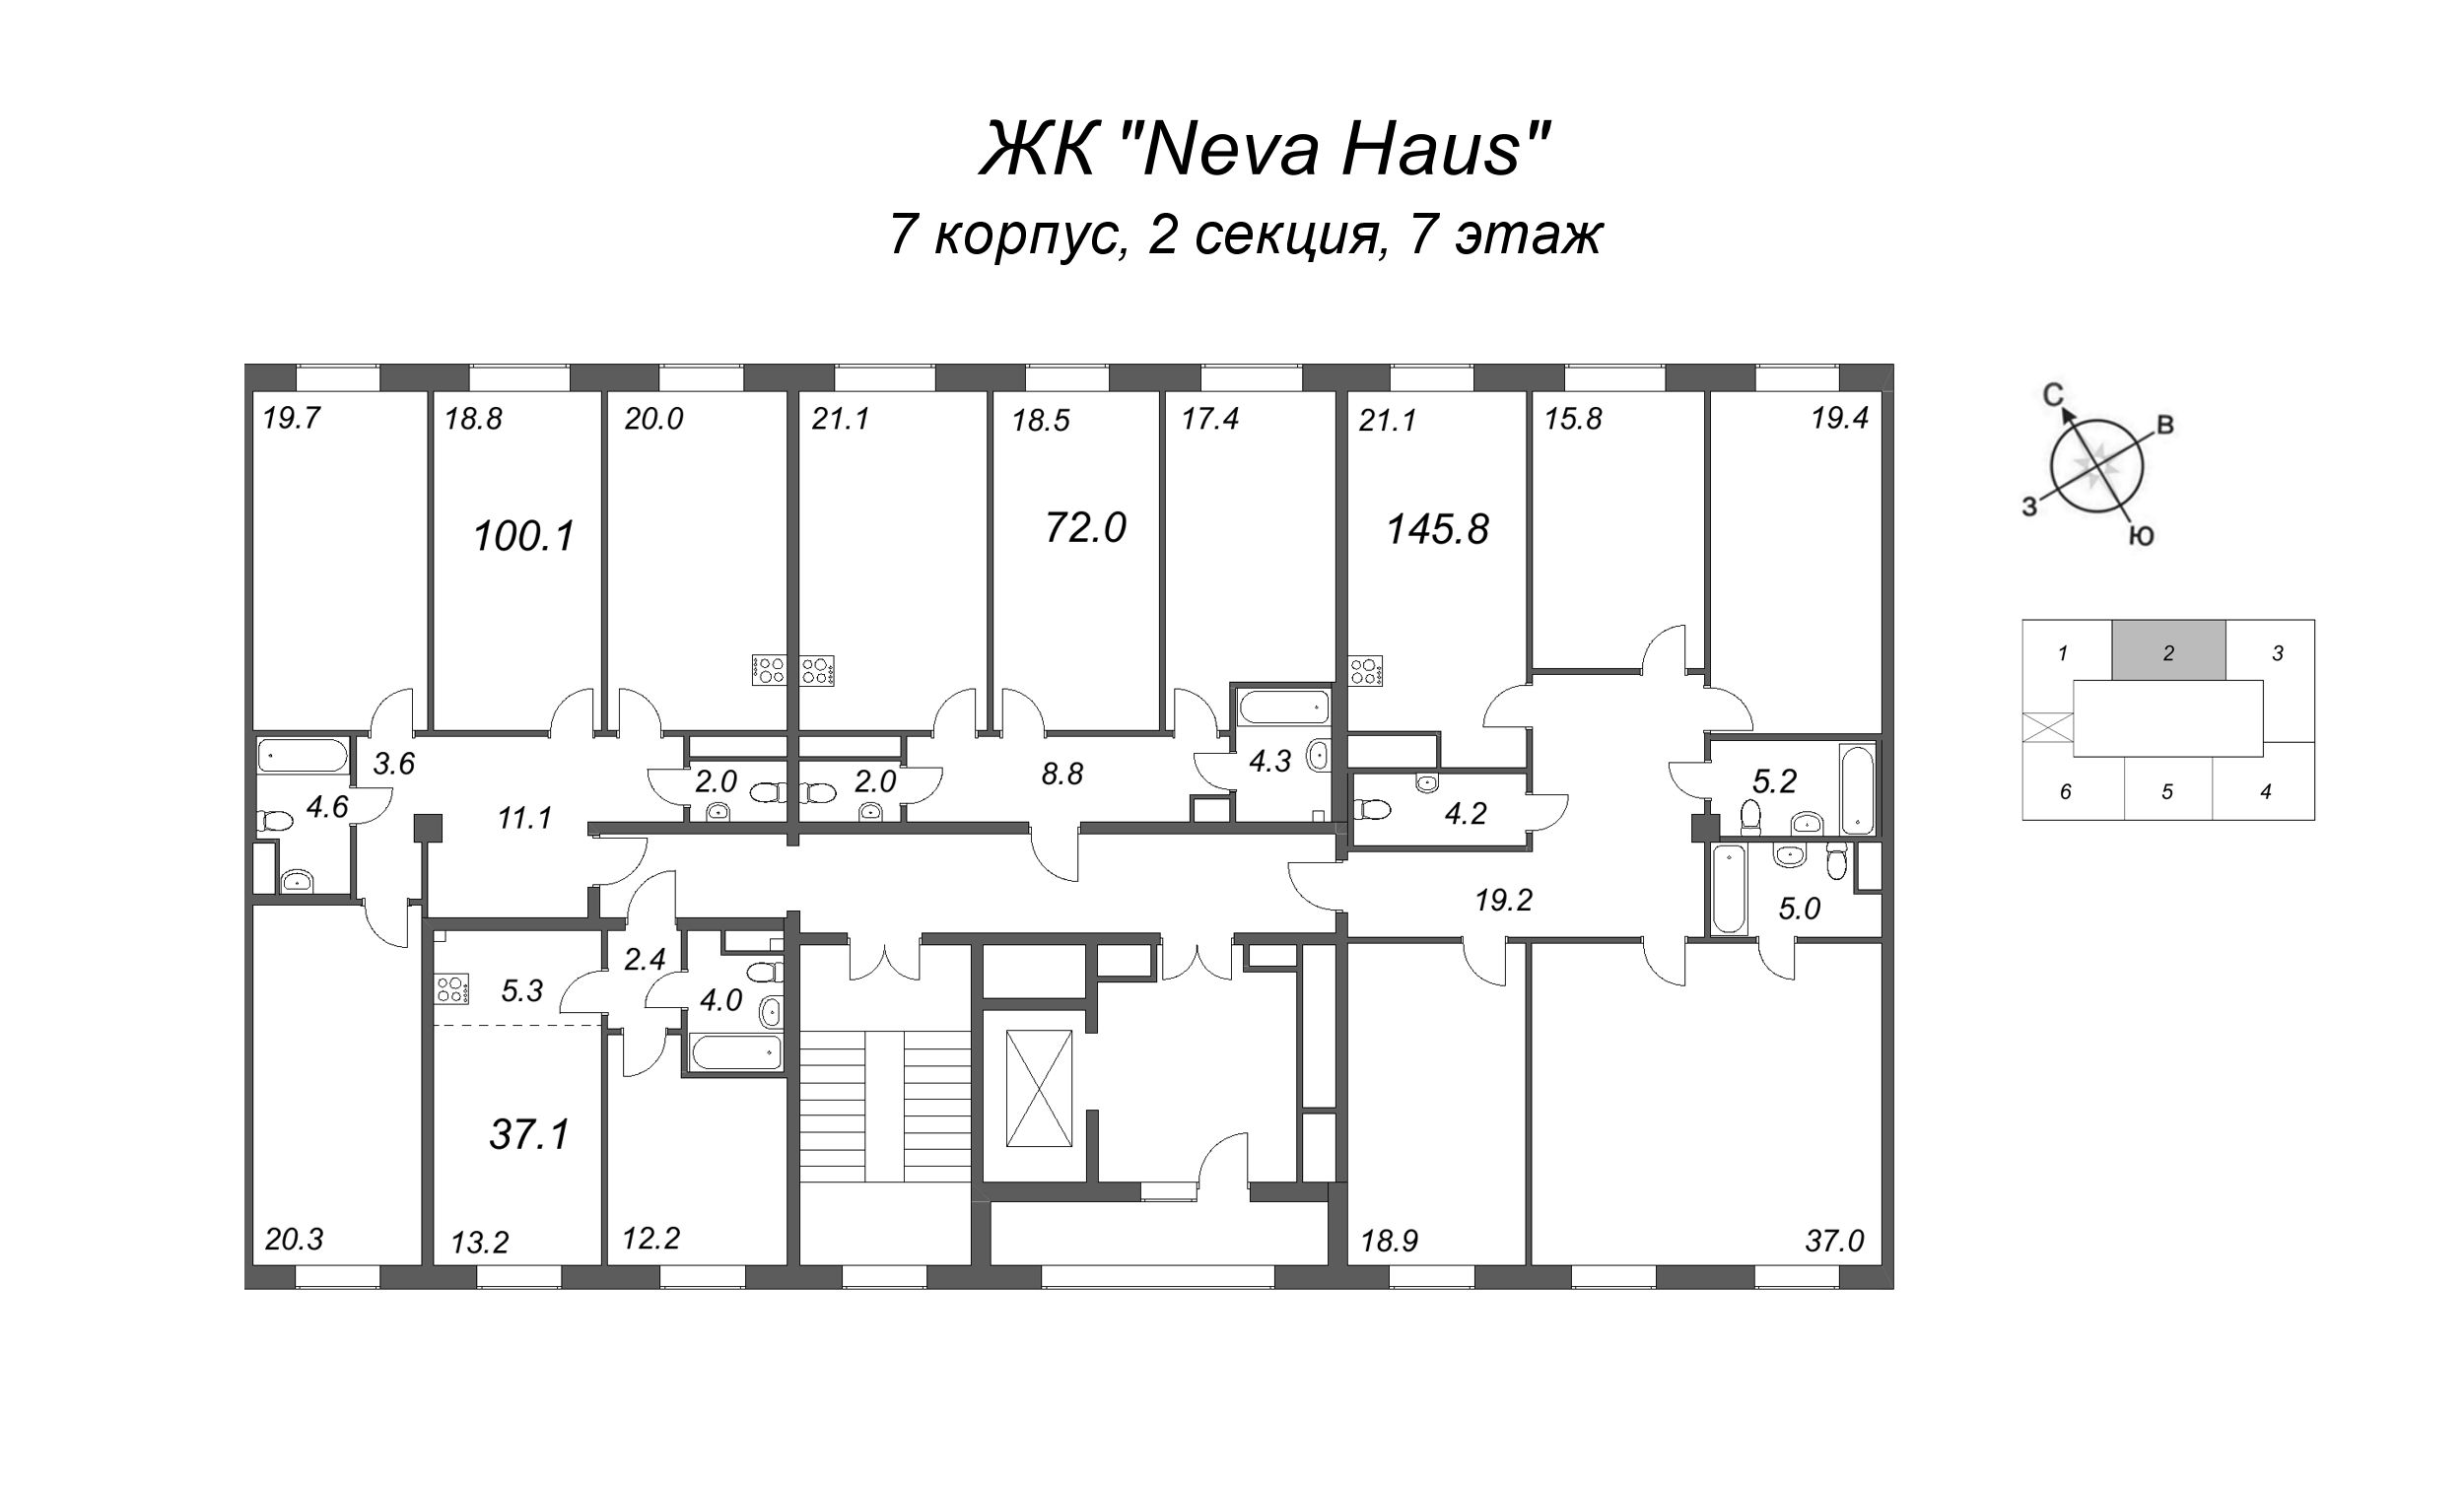 5-комнатная (Евро) квартира, 146.8 м² - планировка этажа